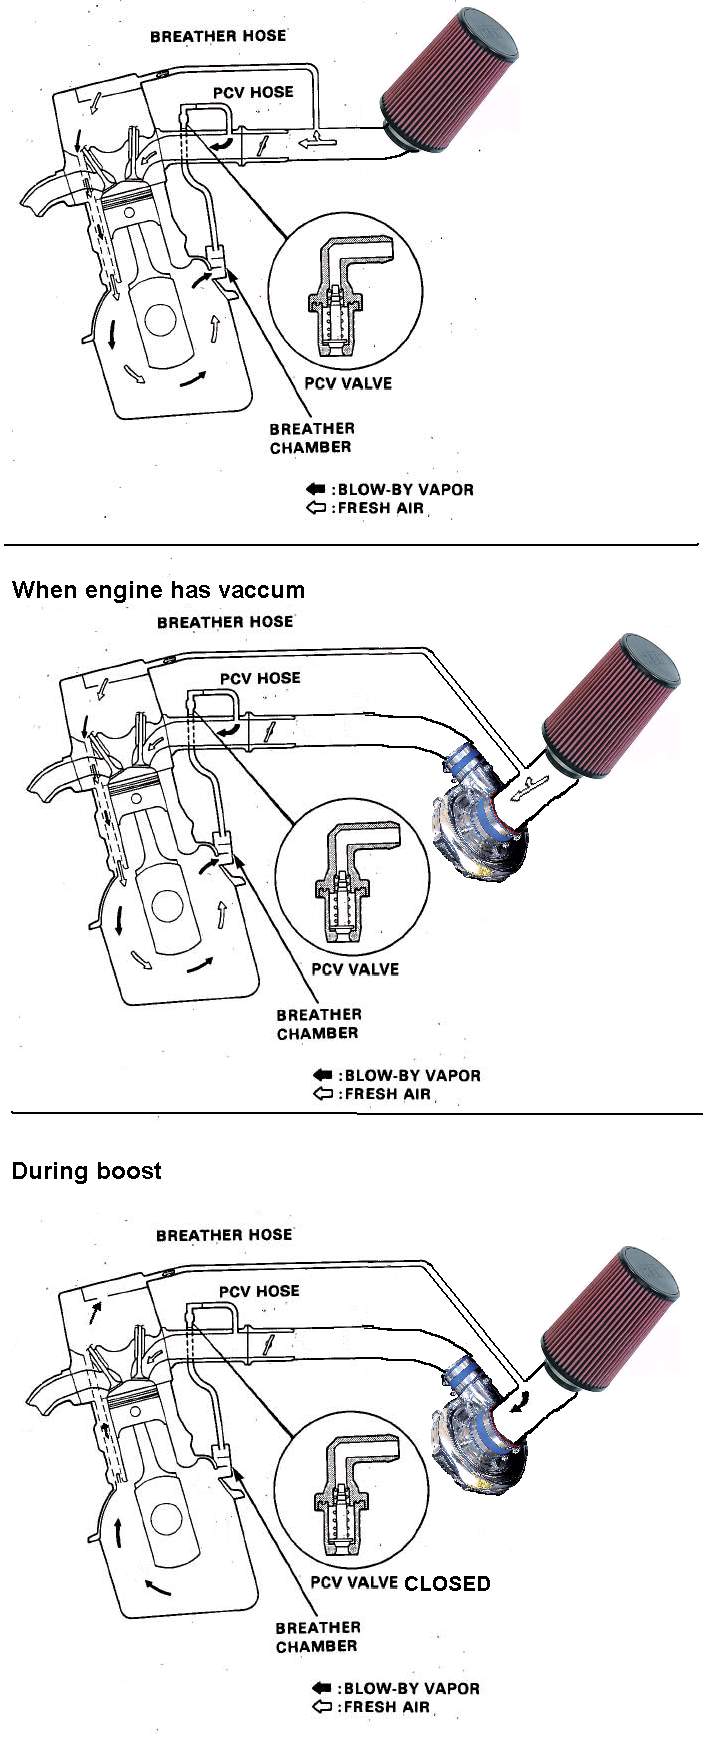 Crankcase Breather valve elictrical diagram -  - Forums